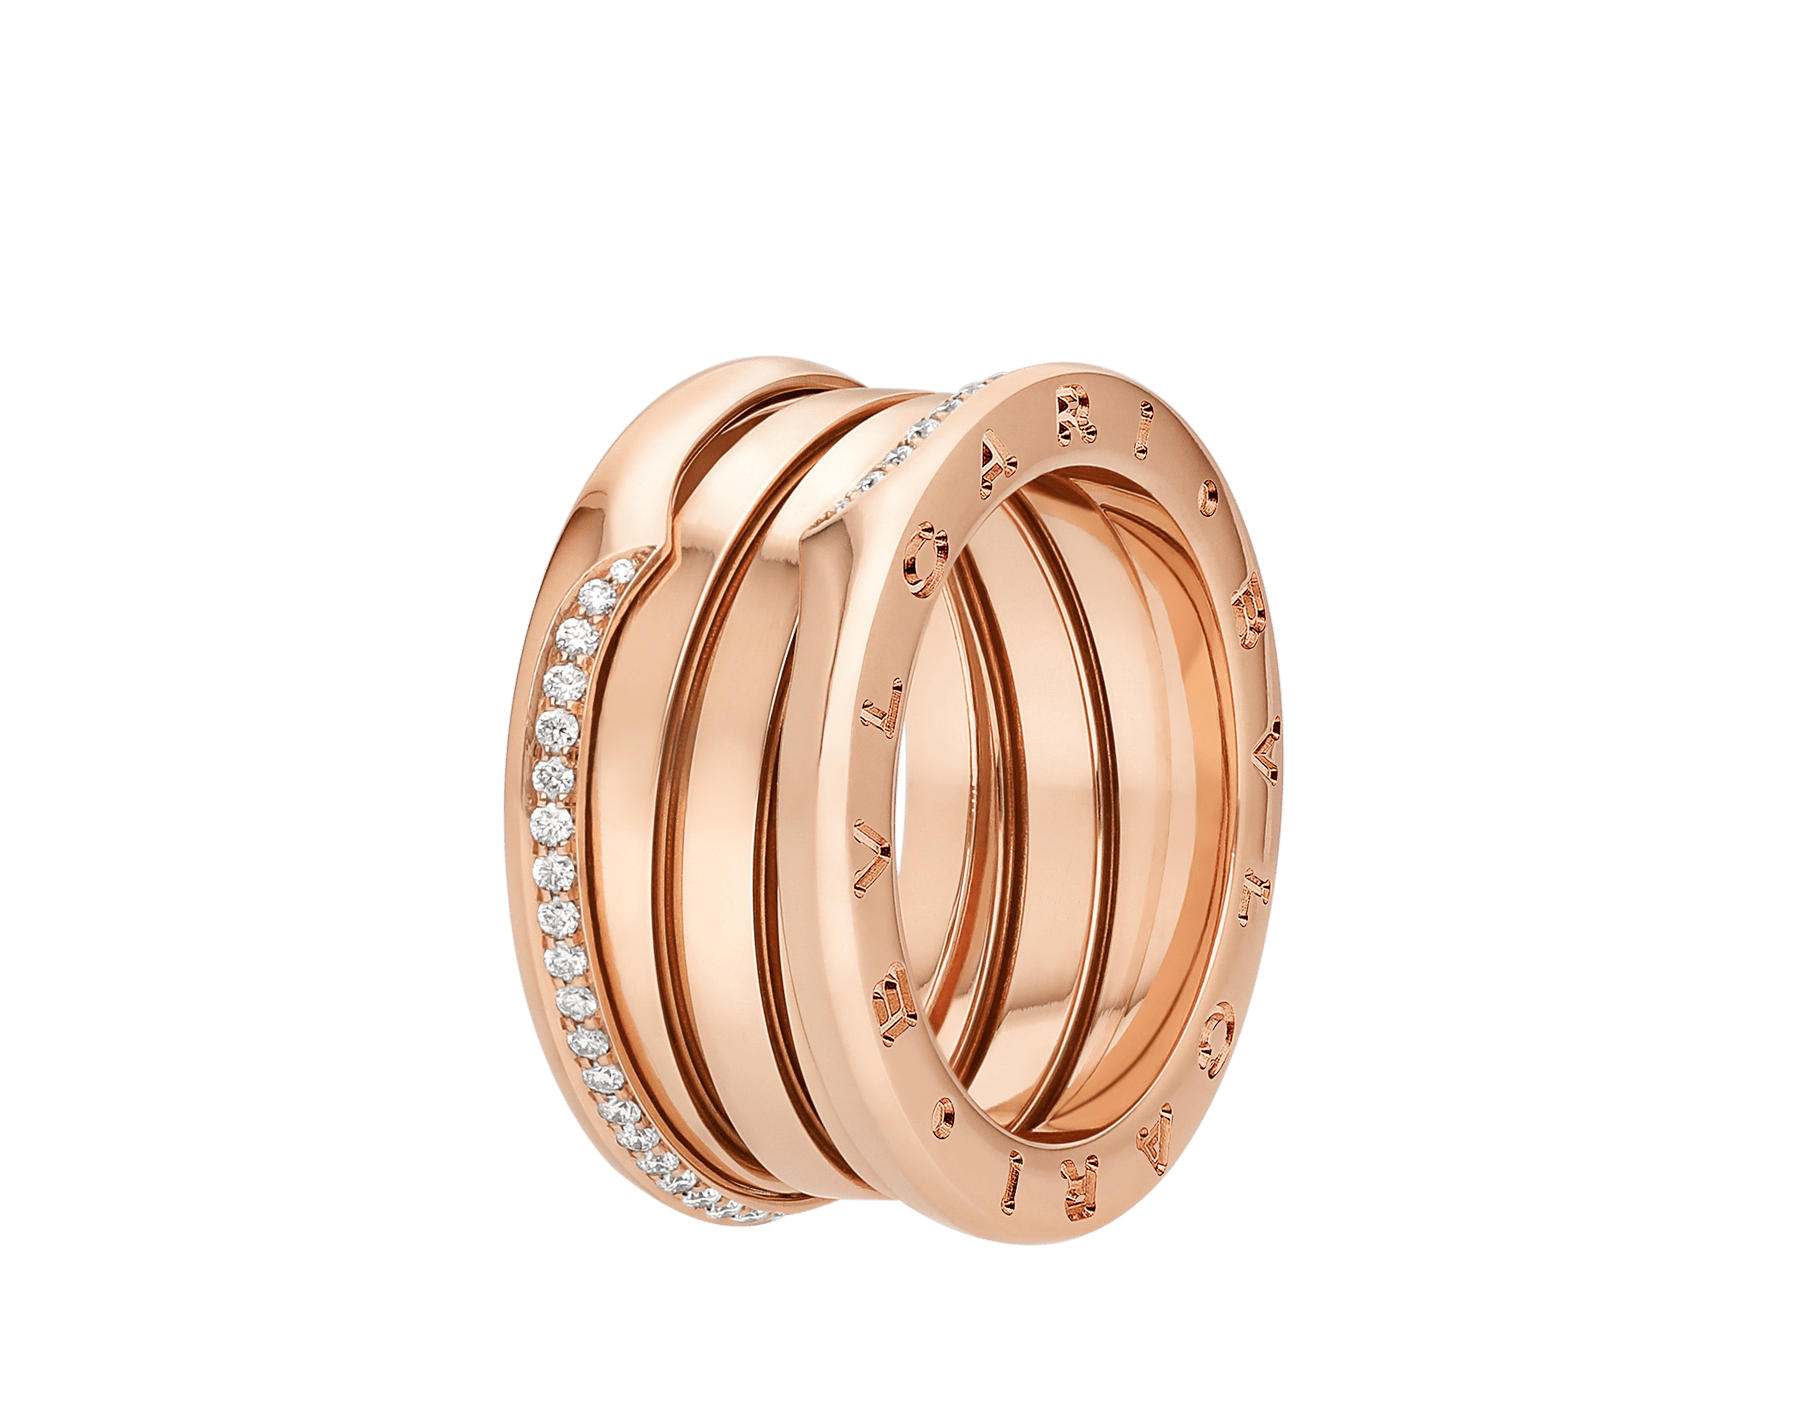 Кольцо B.zero1 с тремя витками, розовое золото 18 карат, фрагменты бриллиантового паве с двух сторон AN859412 image 1